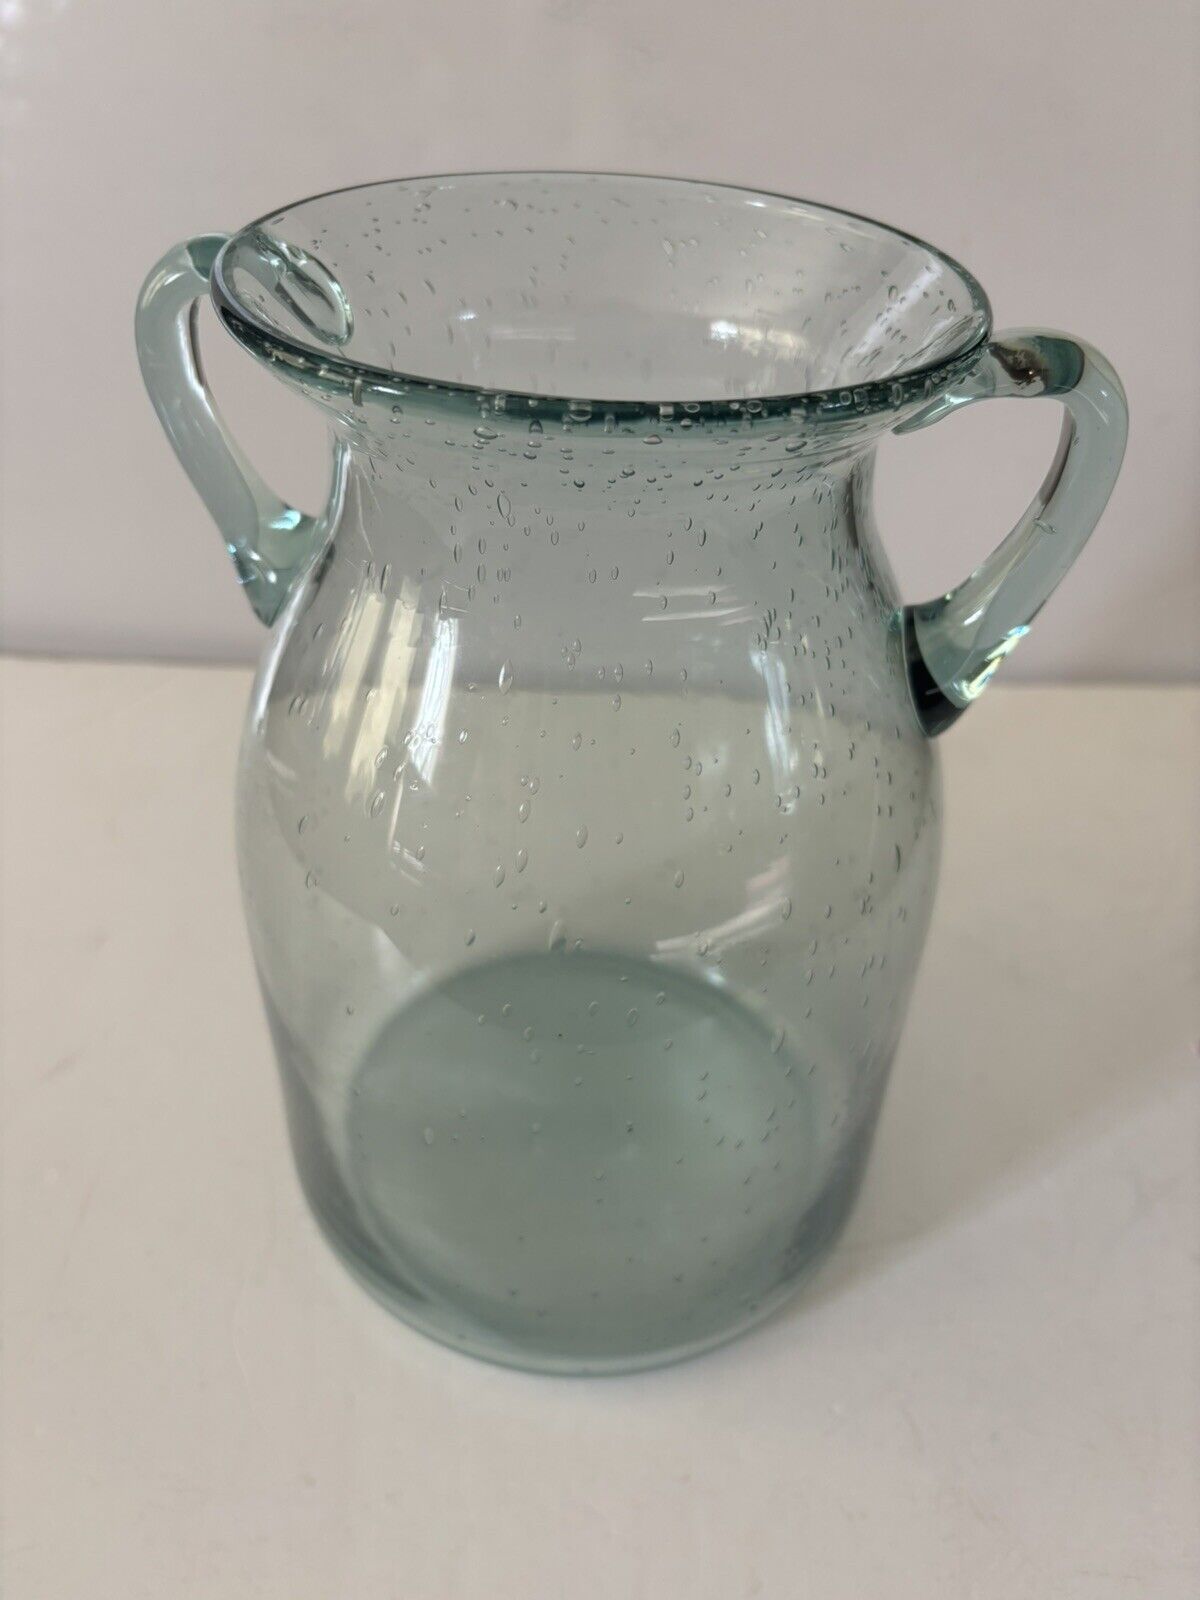 Unique Bubble Glass Flower Vase With Pale Green Coloring